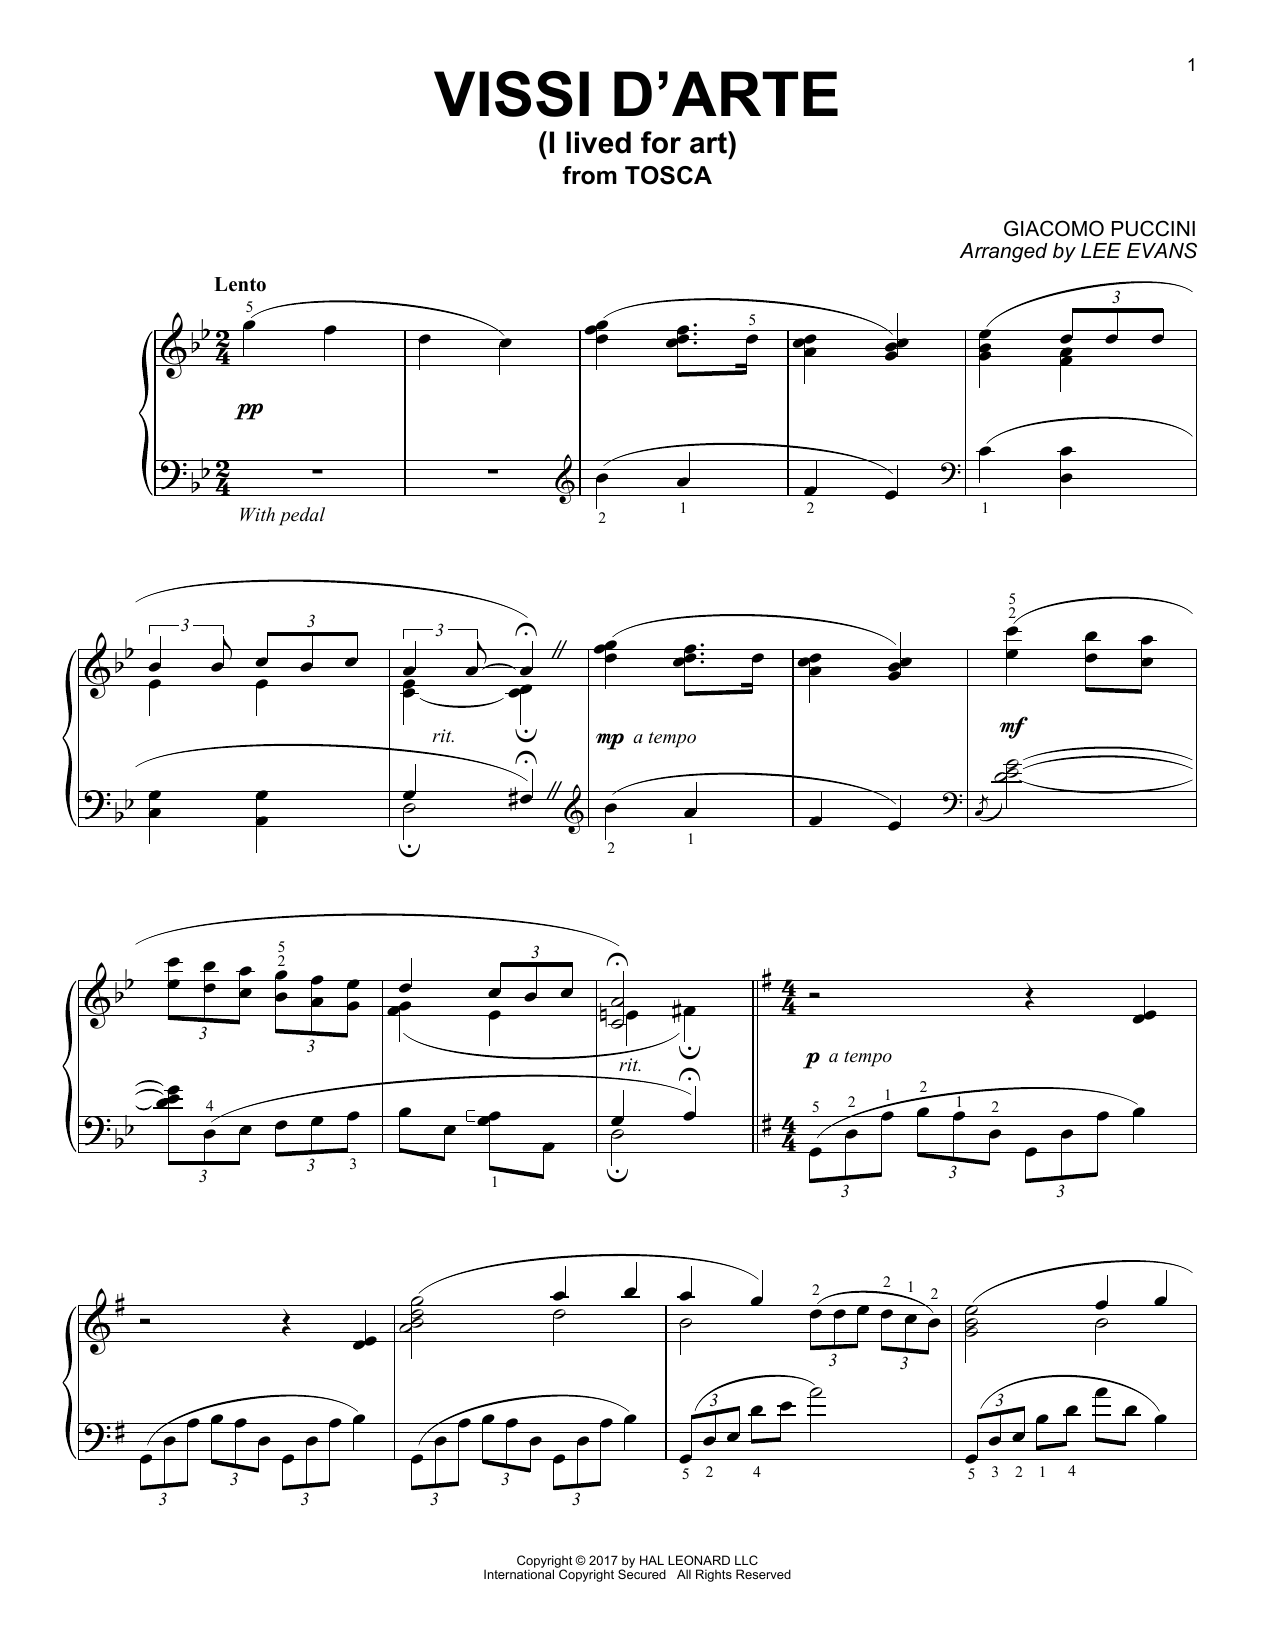 Lee Evans Vissi D'arte Sheet Music Notes & Chords for Piano - Download or Print PDF